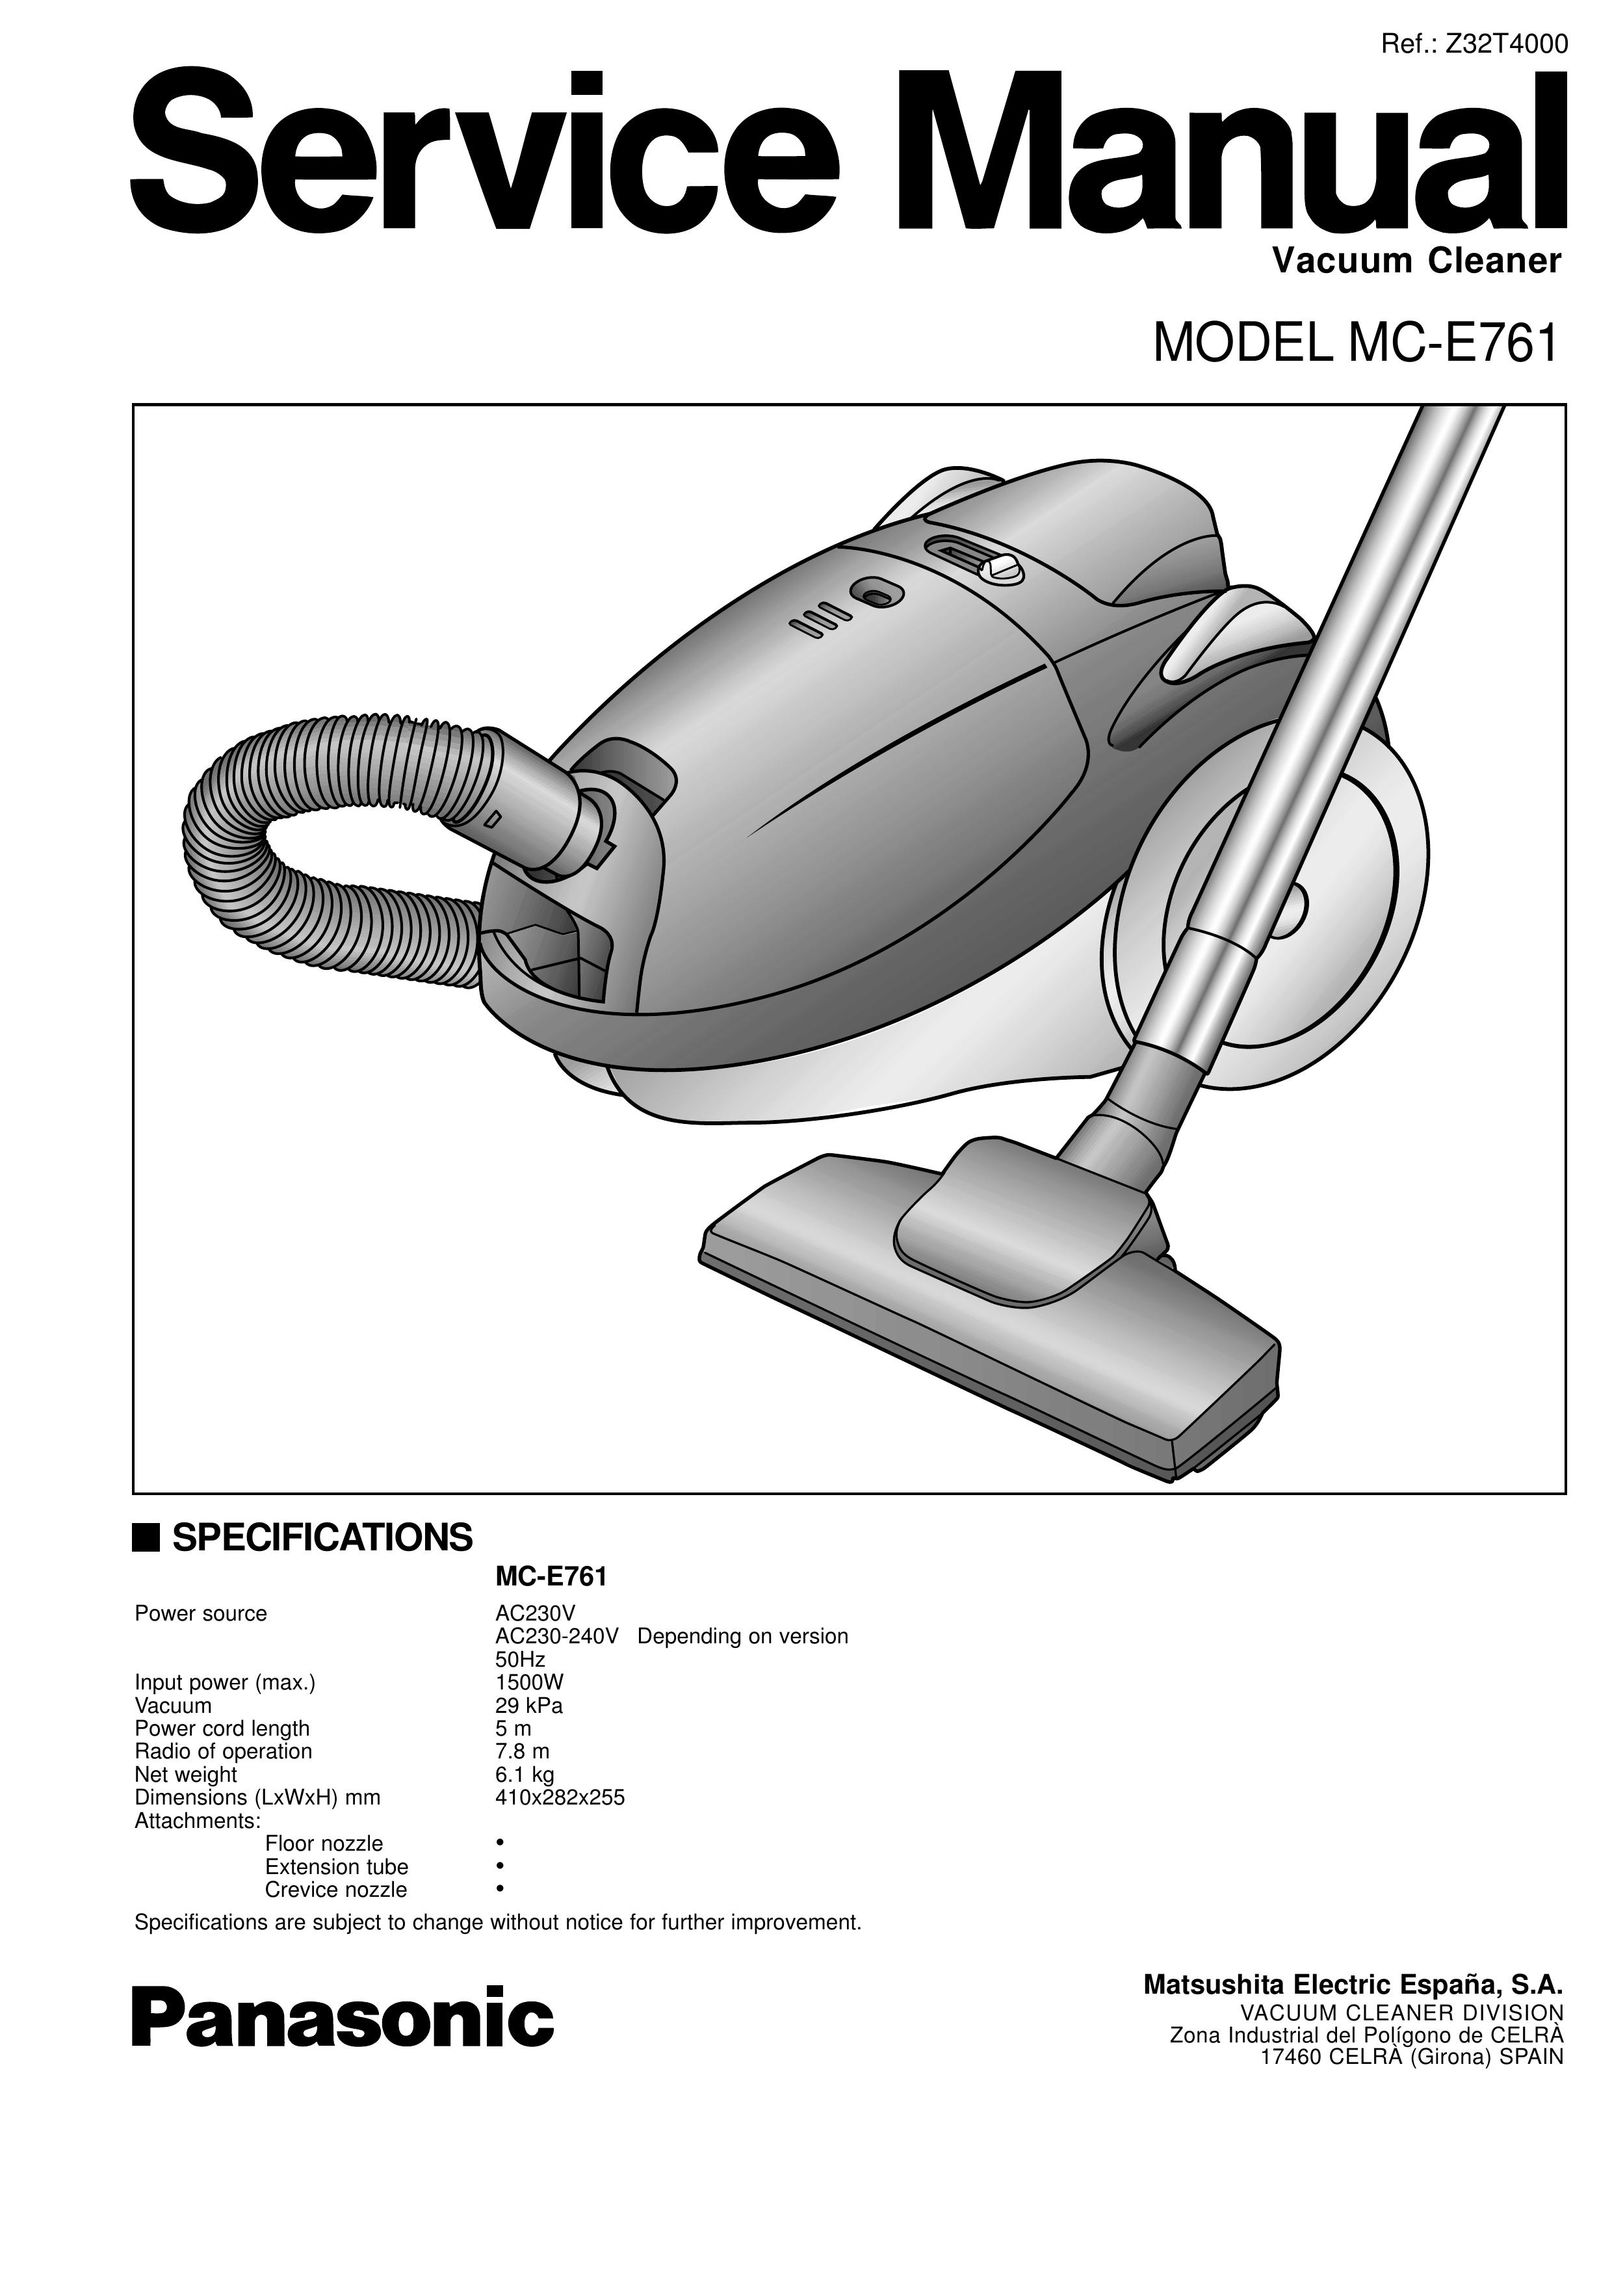 Panasonic MC-E761 Vacuum Cleaner User Manual